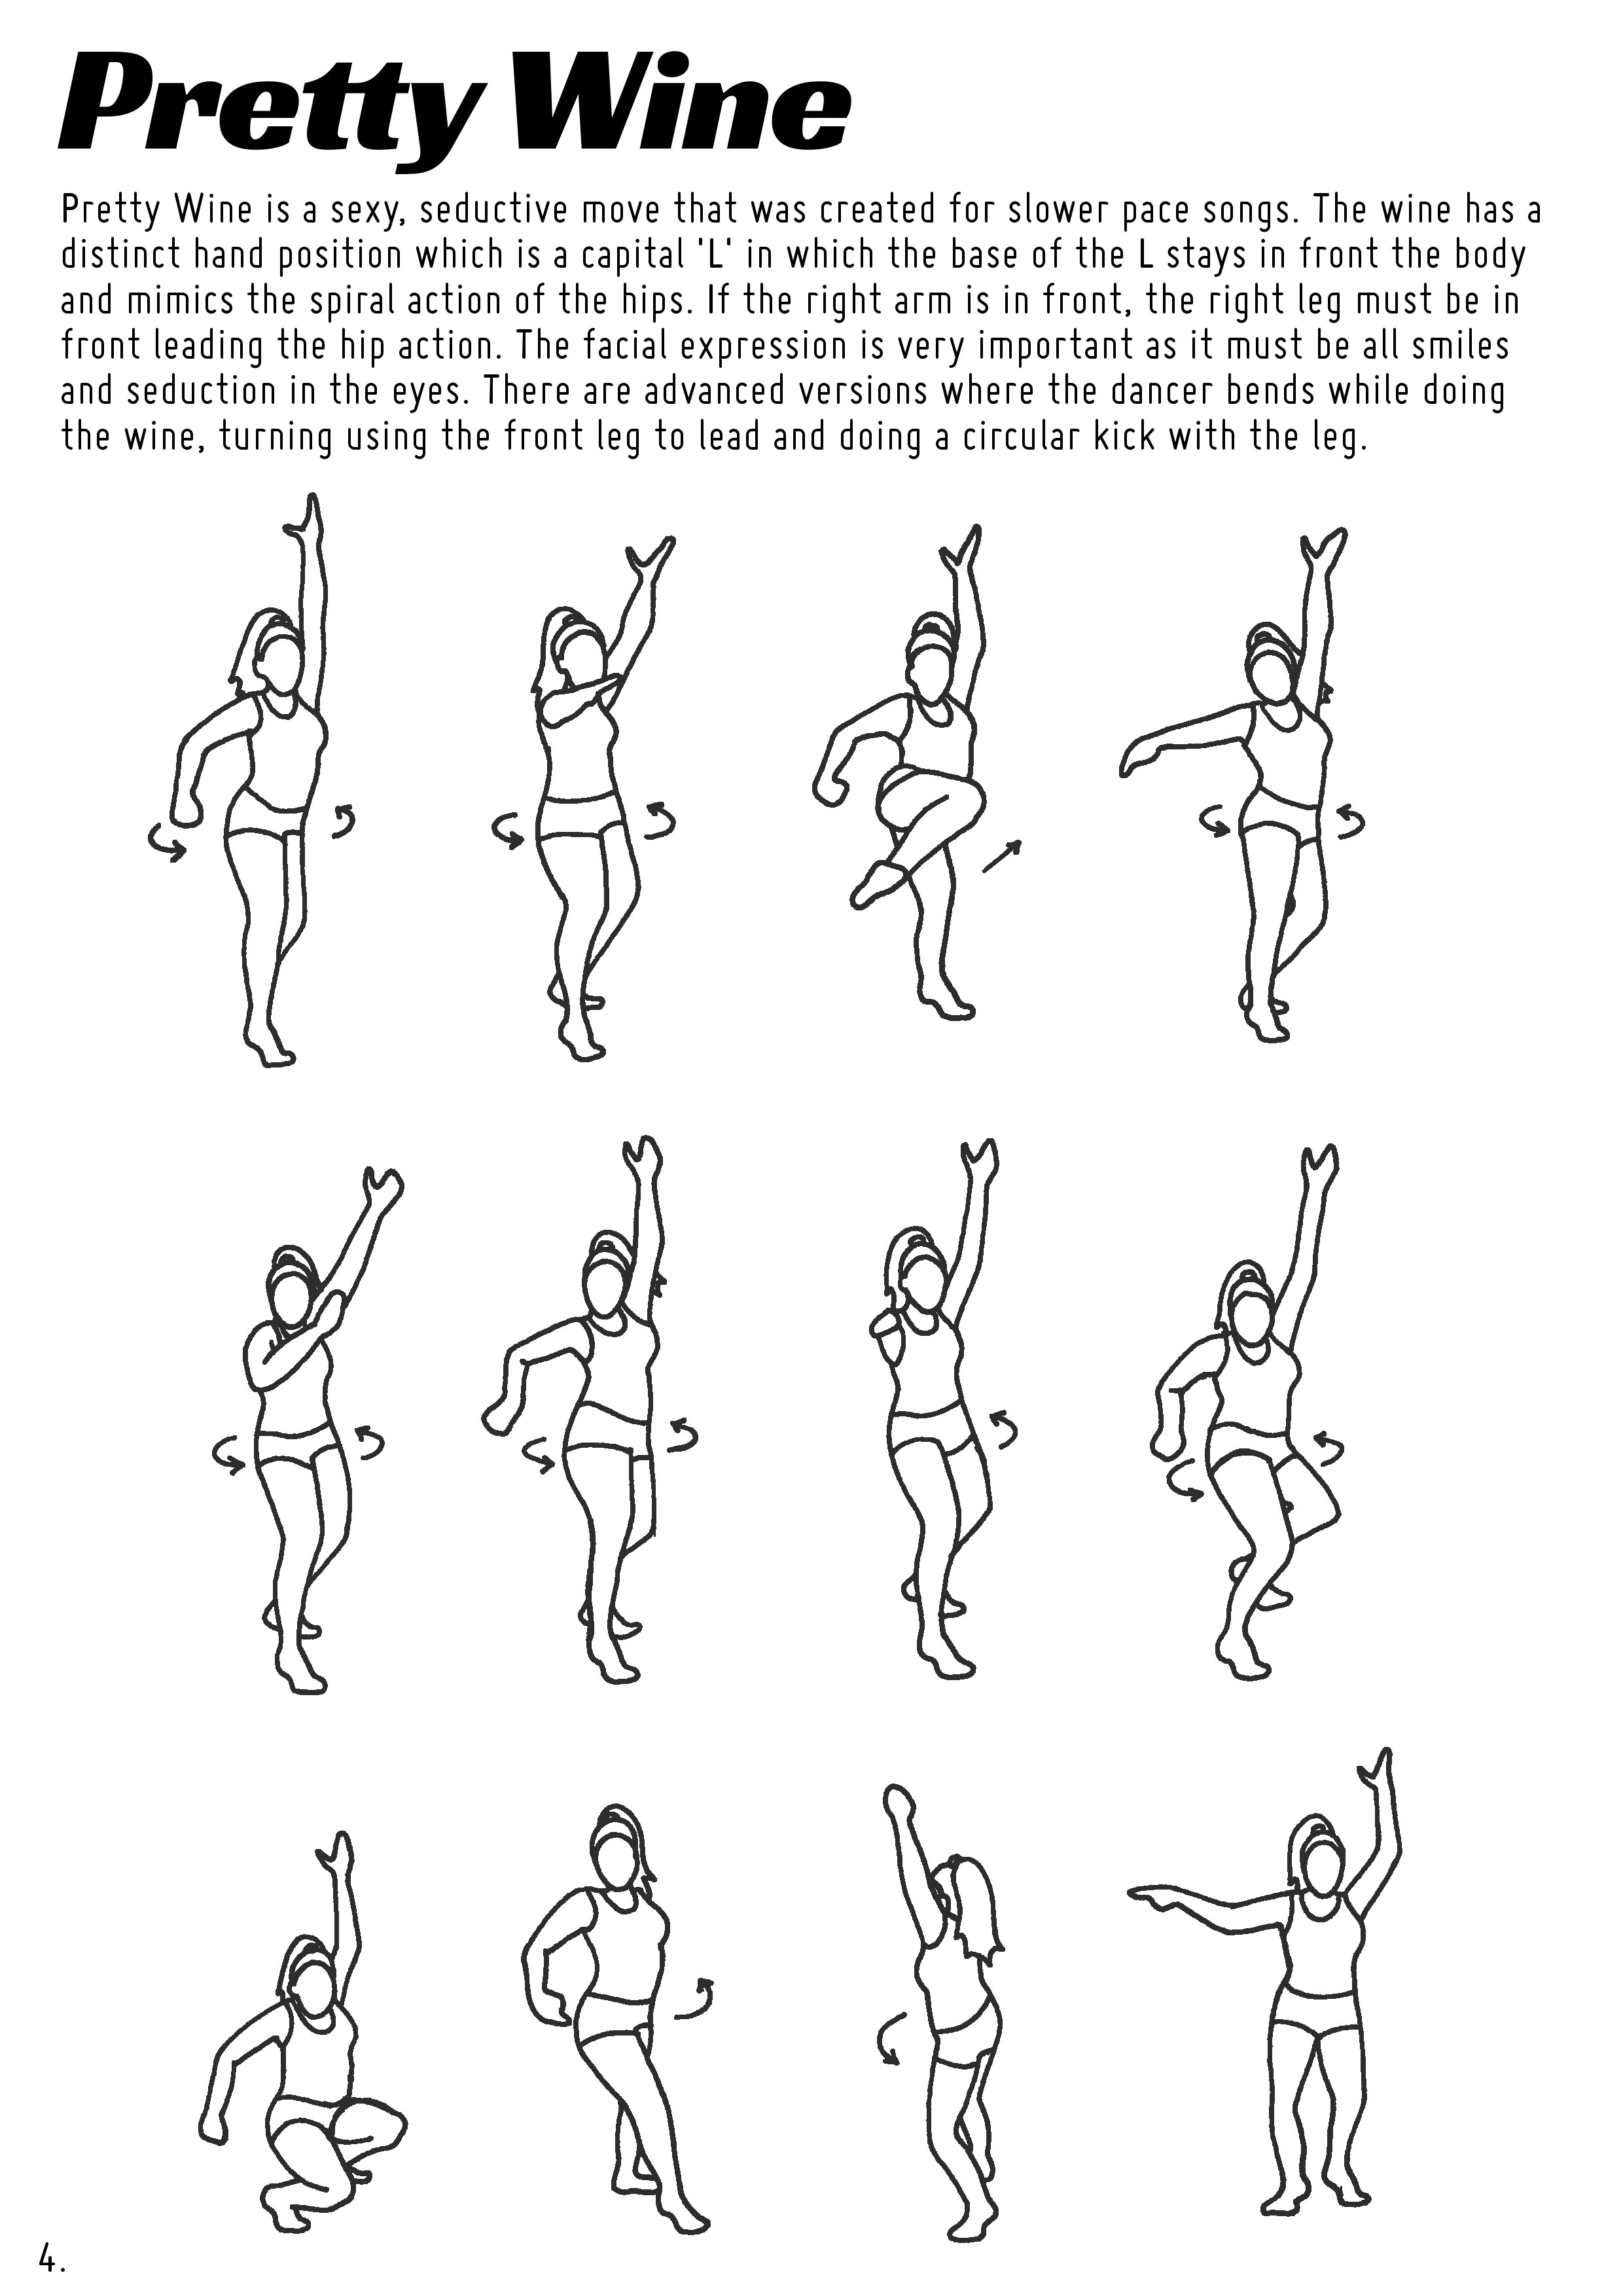 Visual Culture: Latonya Style + Robin Clare's "Stylish Moves" Dance